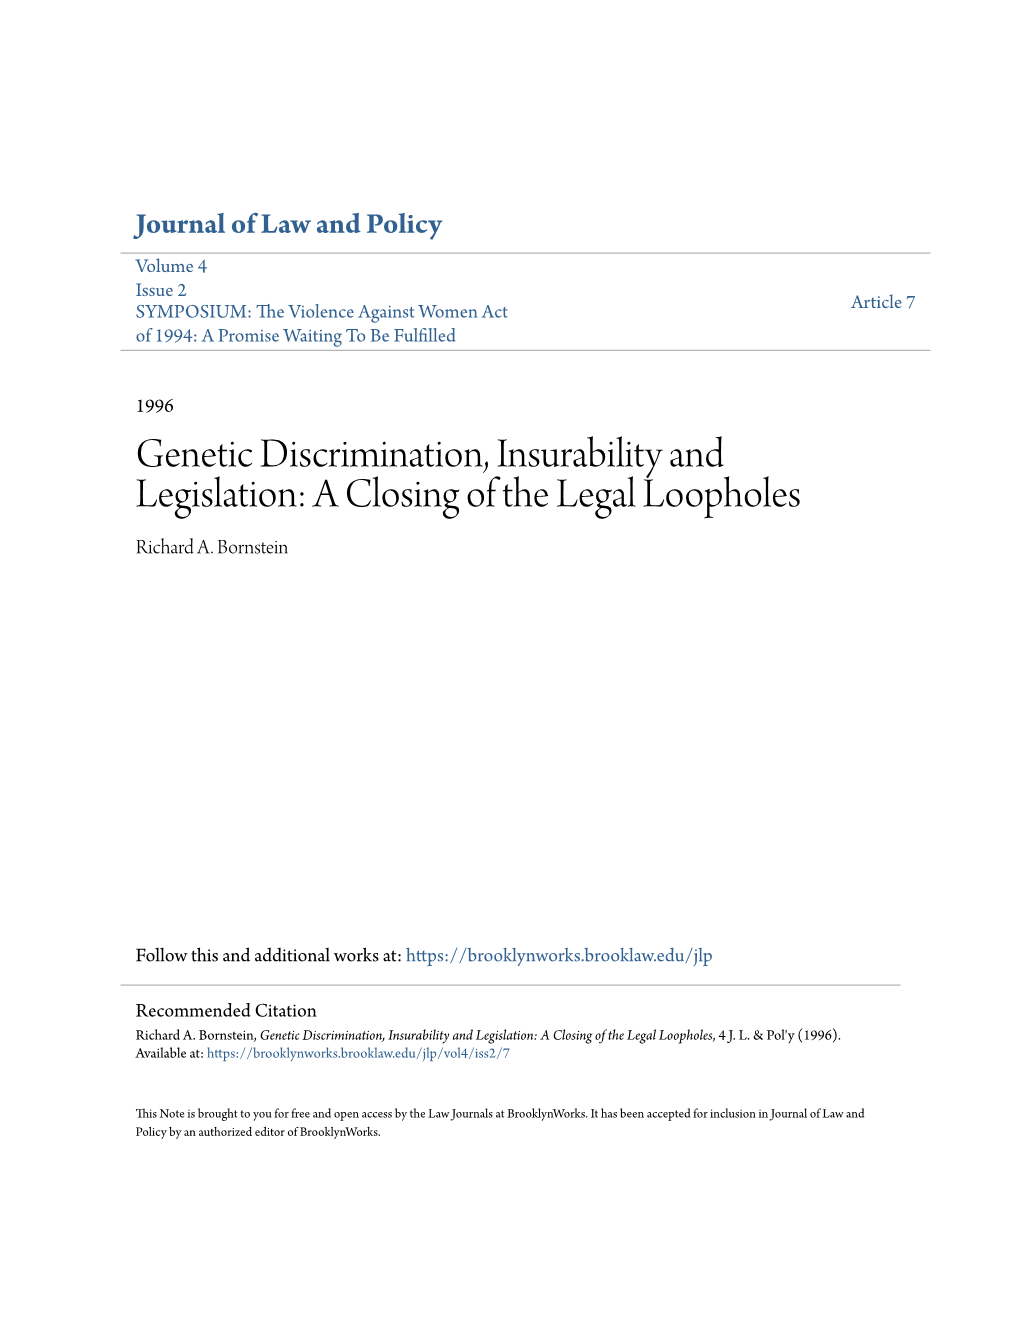 Genetic Discrimination, Insurability and Legislation: a Closing of the Legal Loopholes Richard A